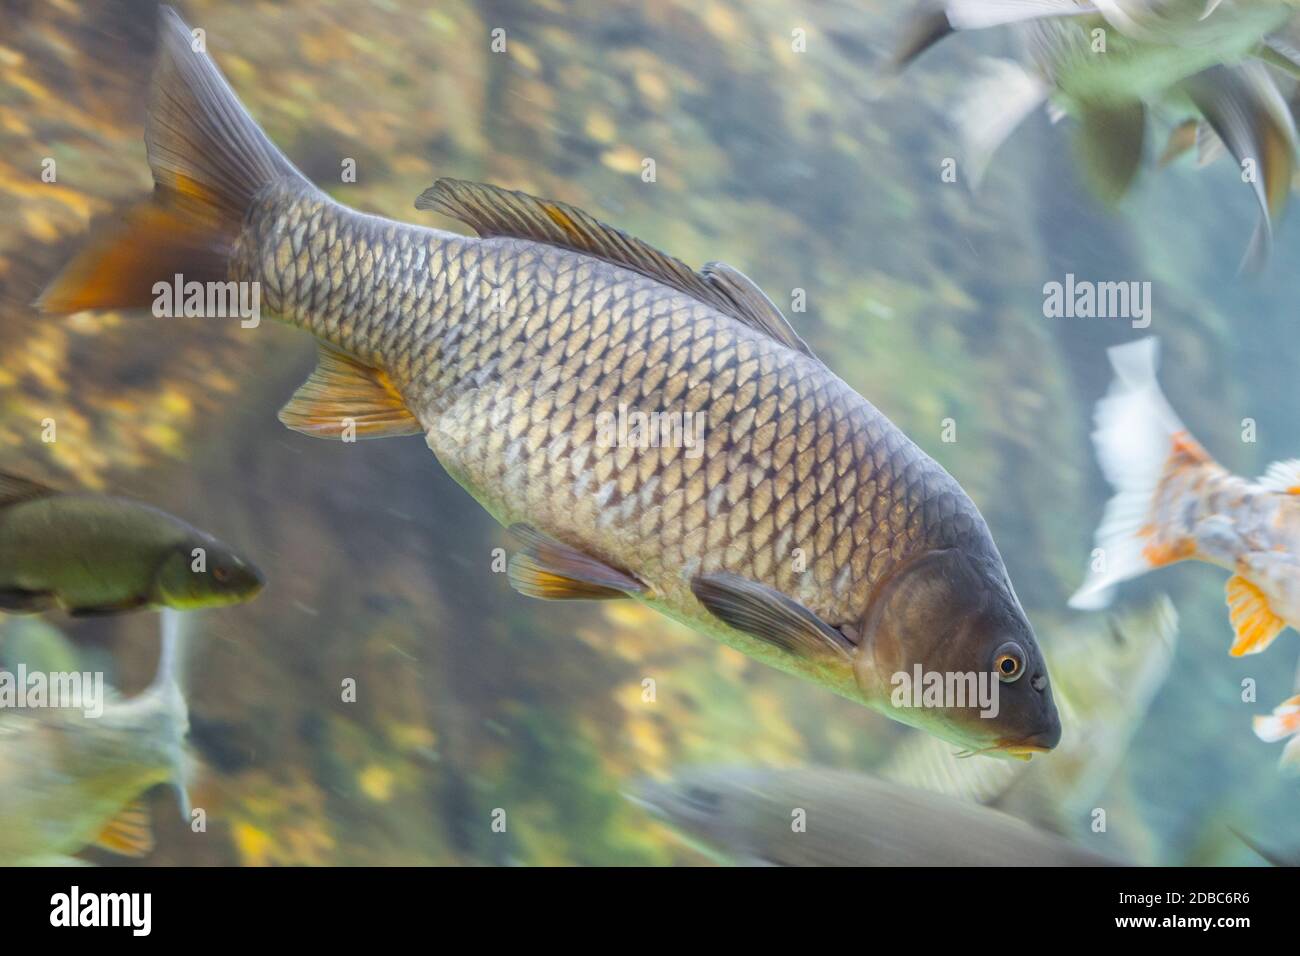 European carp or Cyprinus carpio, a species of freshwater fish, abundant in Guadiana River, Spain Stock Photo